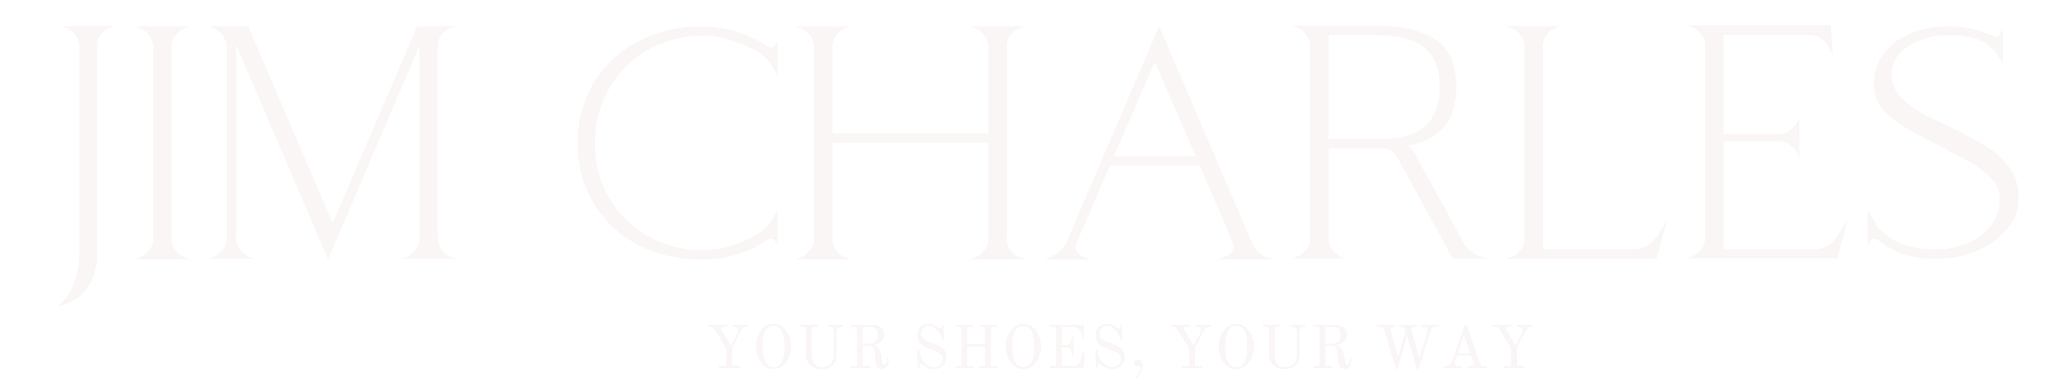 Jim Charles Shoes Logo